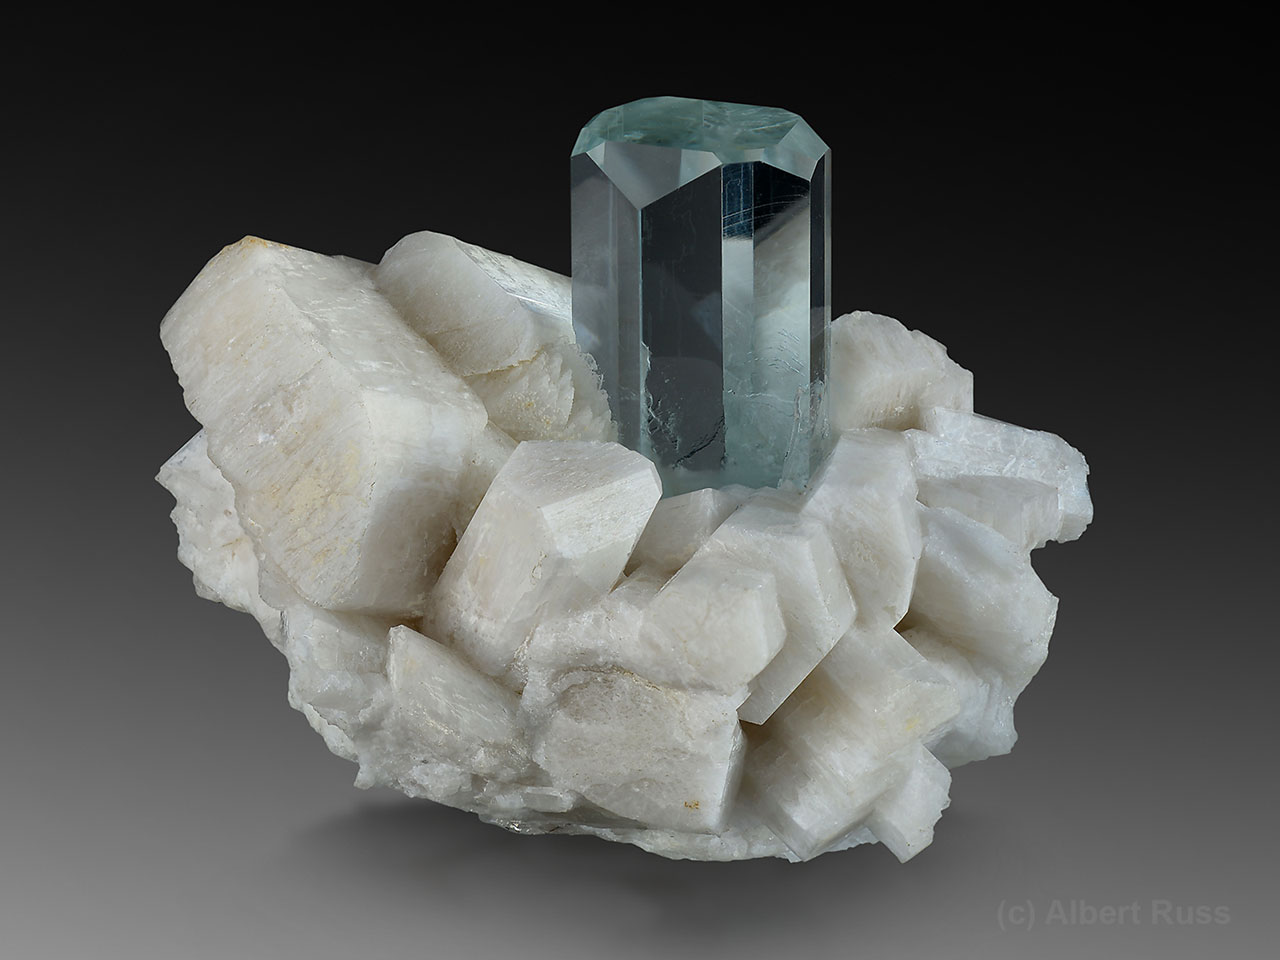 Gem quality aquamarine crystal on white K-feldspar from Shigar Valley, Pakistan